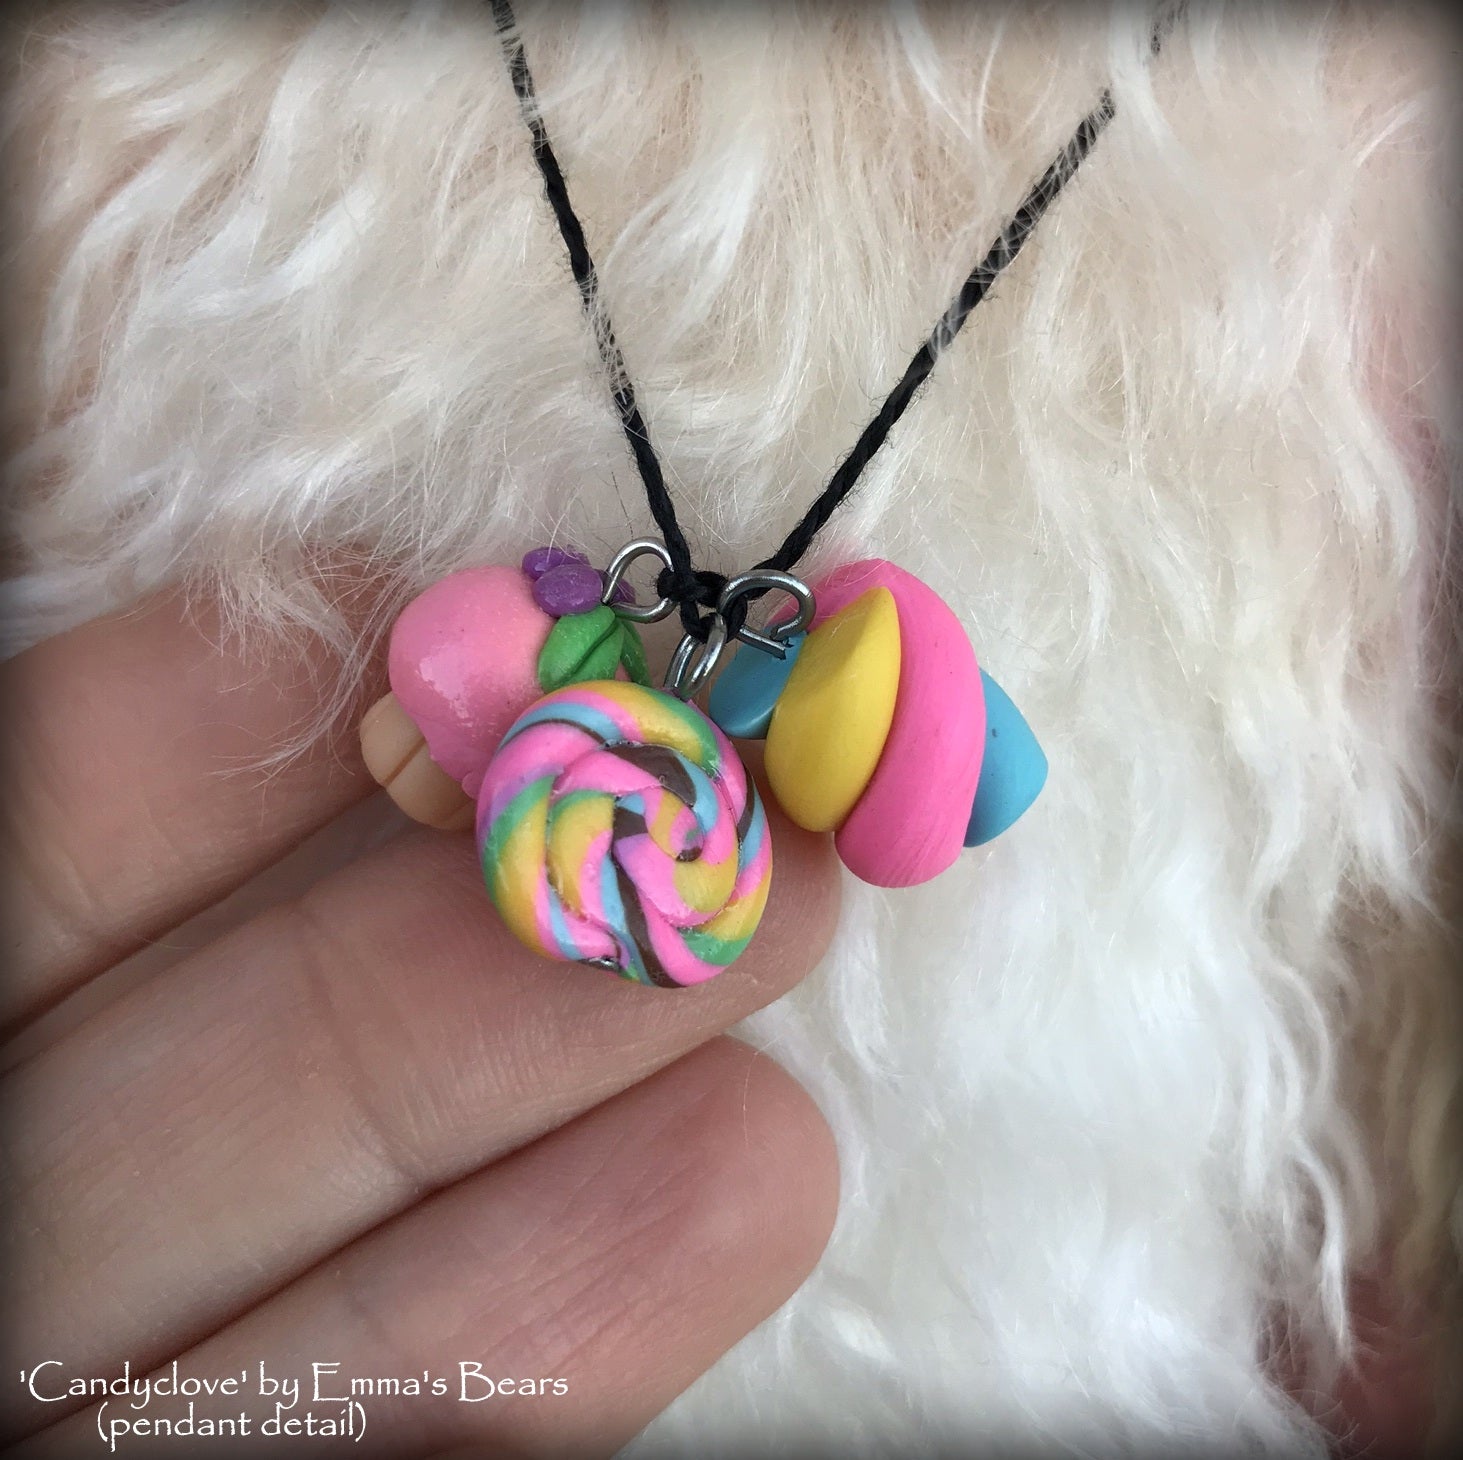 Candyclove - 18" hand-dyed mohair Artist Bear by Emma's Bears - OOAK